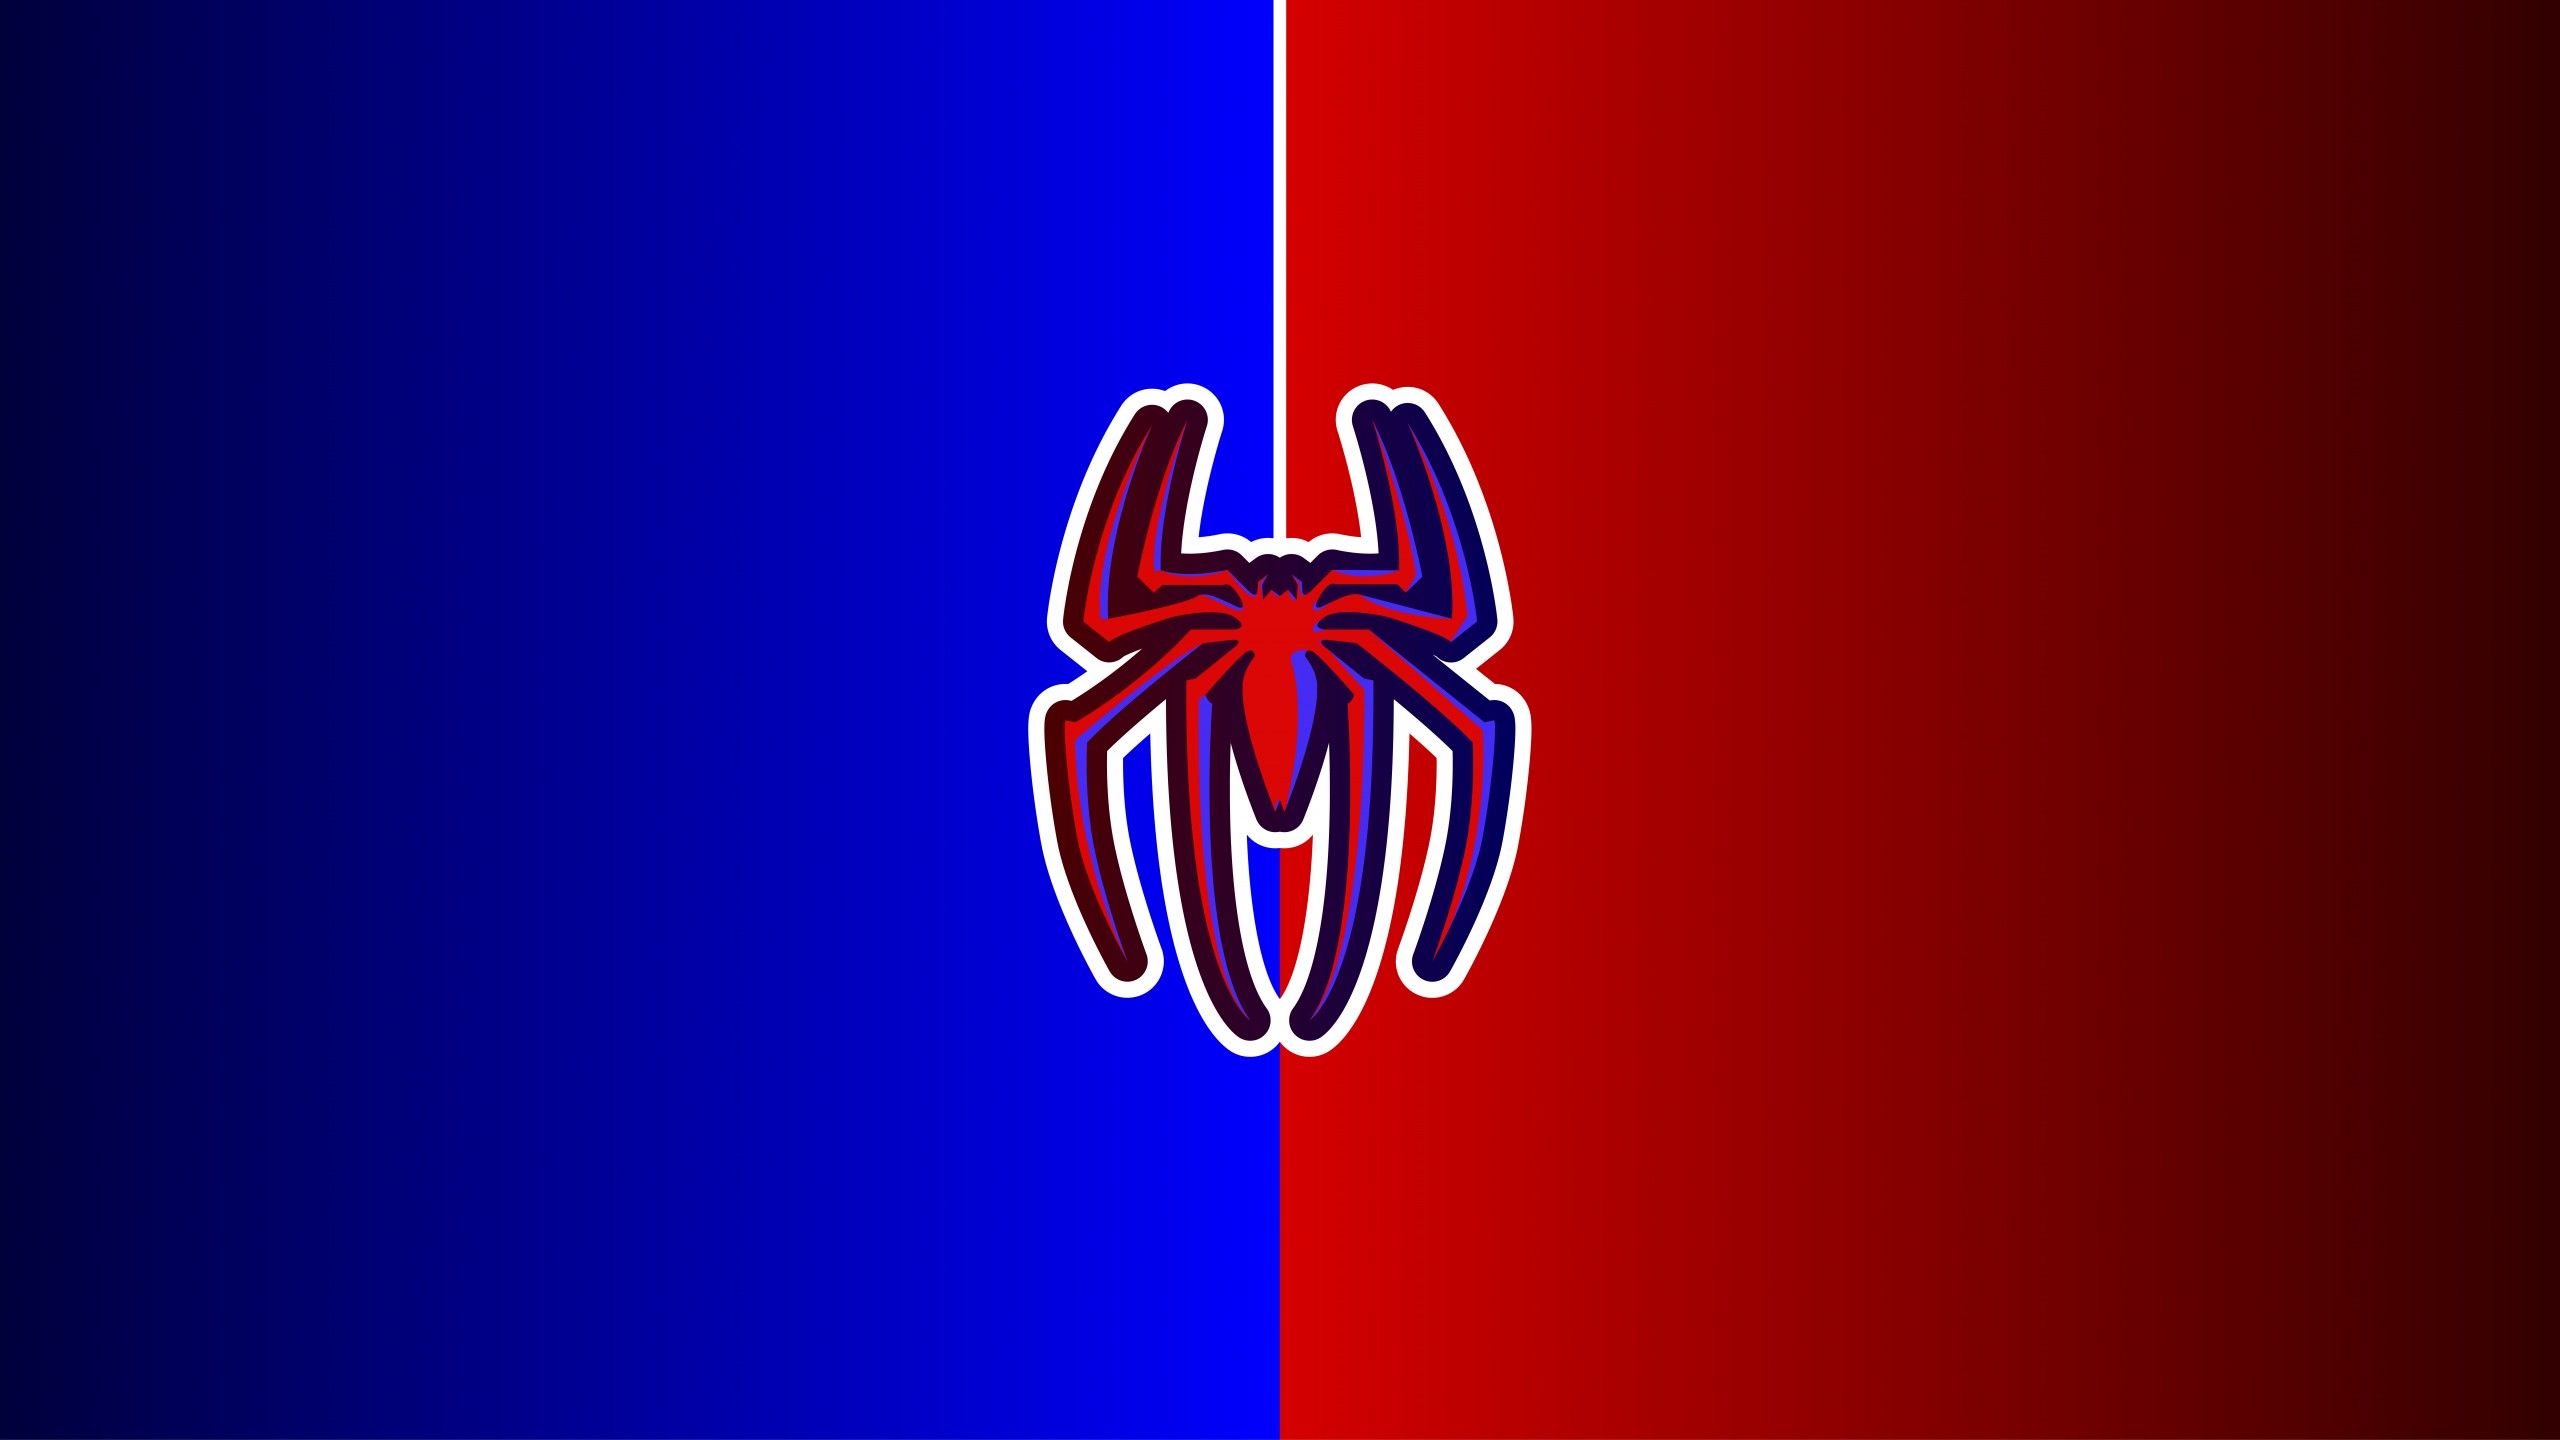 Spider Man 4K Wallpaper, Logo, Red Background, Minimal Art, Marvel Superheroes, 5K, 8K, 12K, Minimal